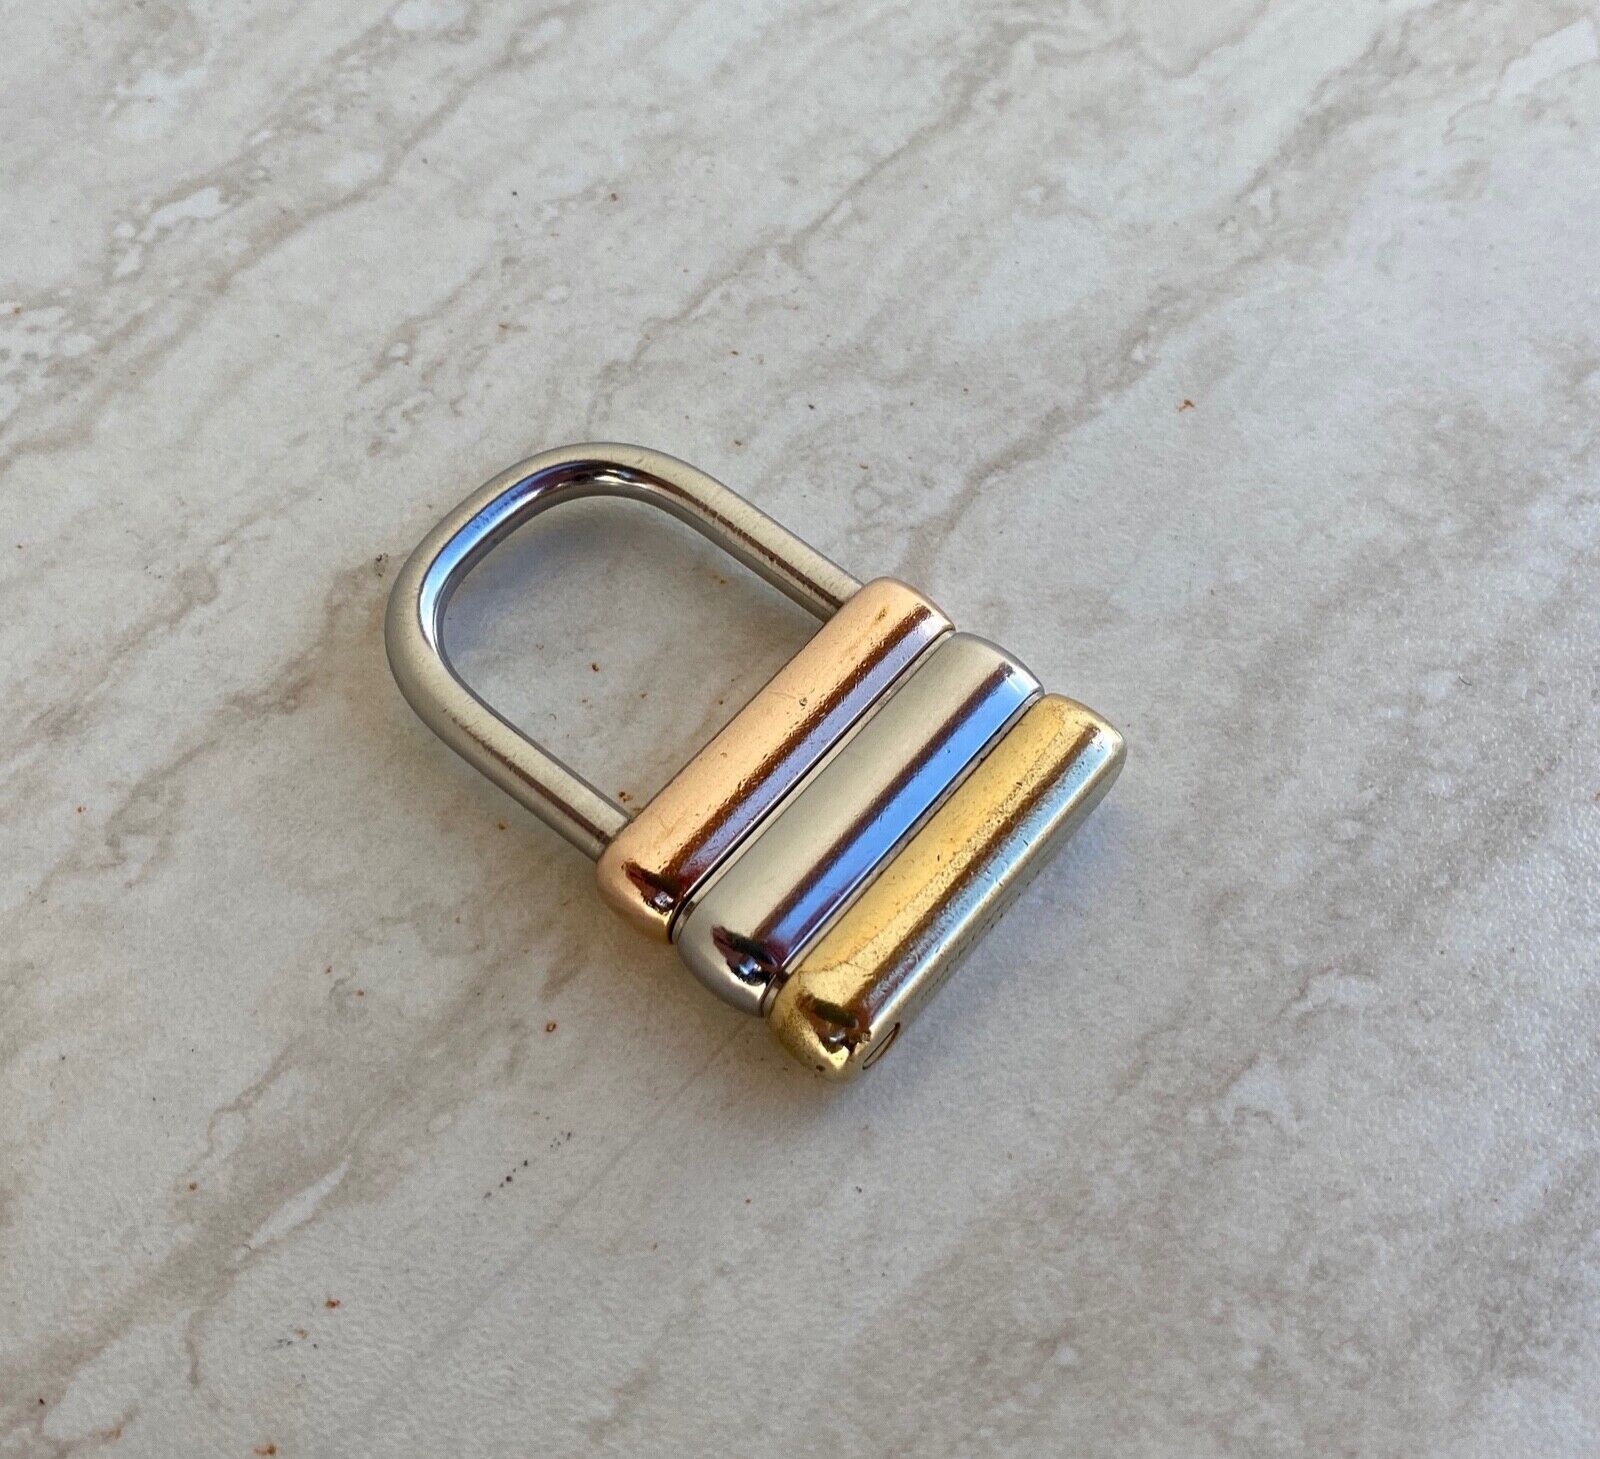 ORIGINAL Cartier key ring pendant key ring charms trilogy santos